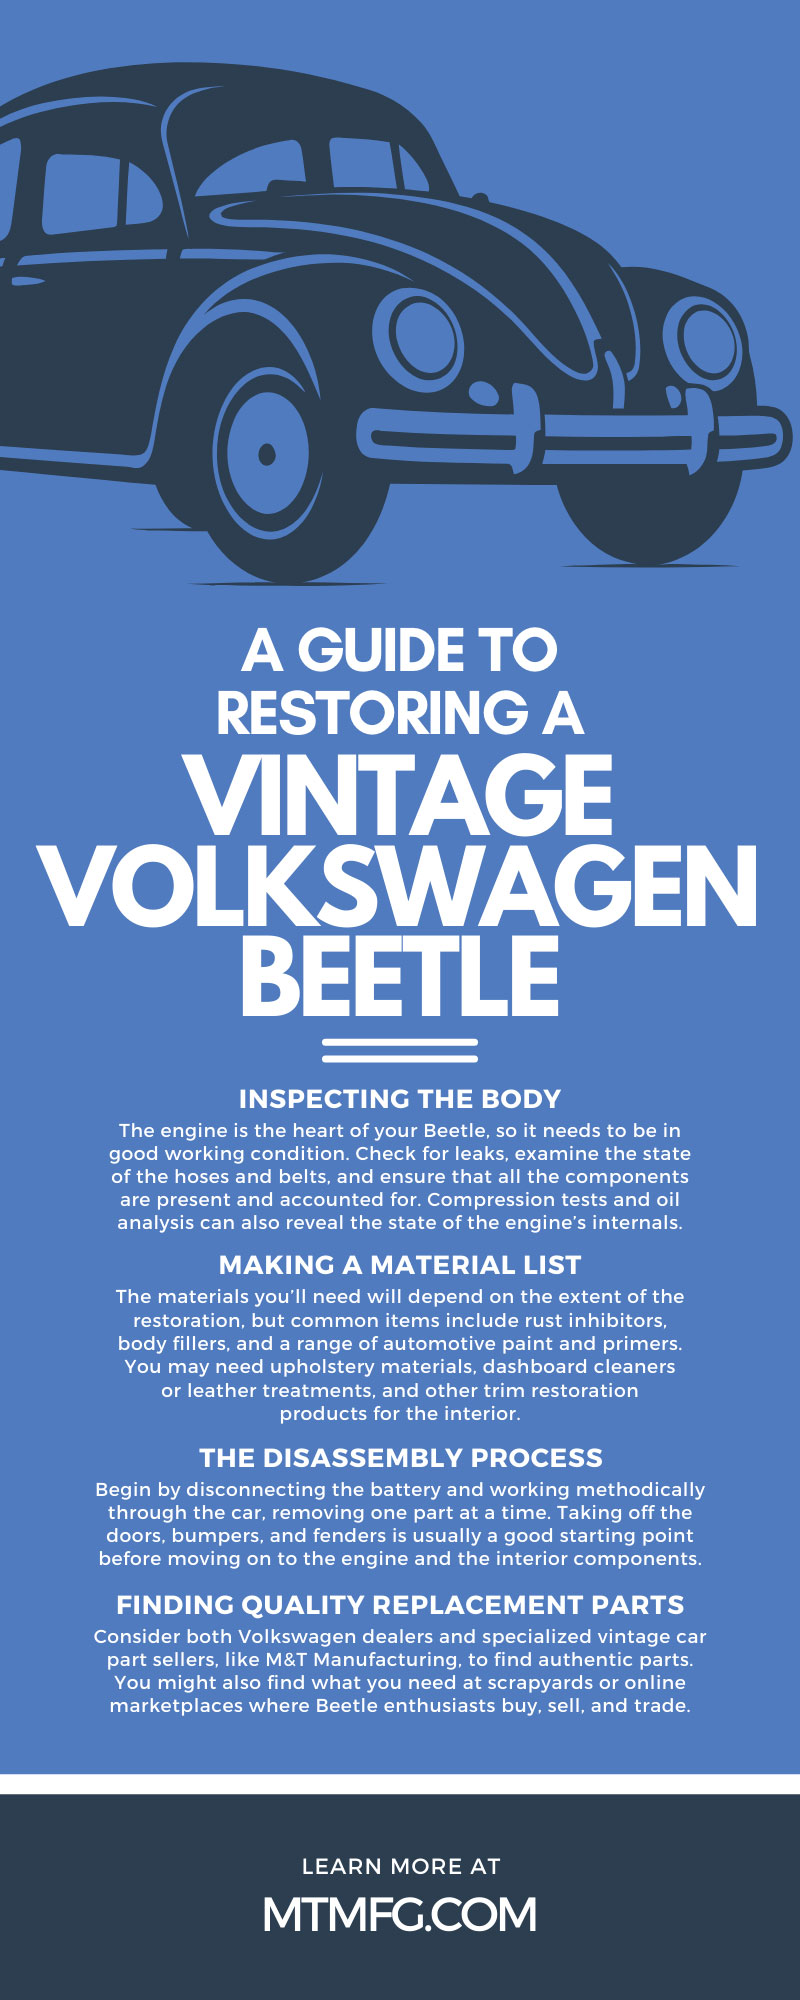 A Guide to Restoring a Vintage Volkswagen Beetle